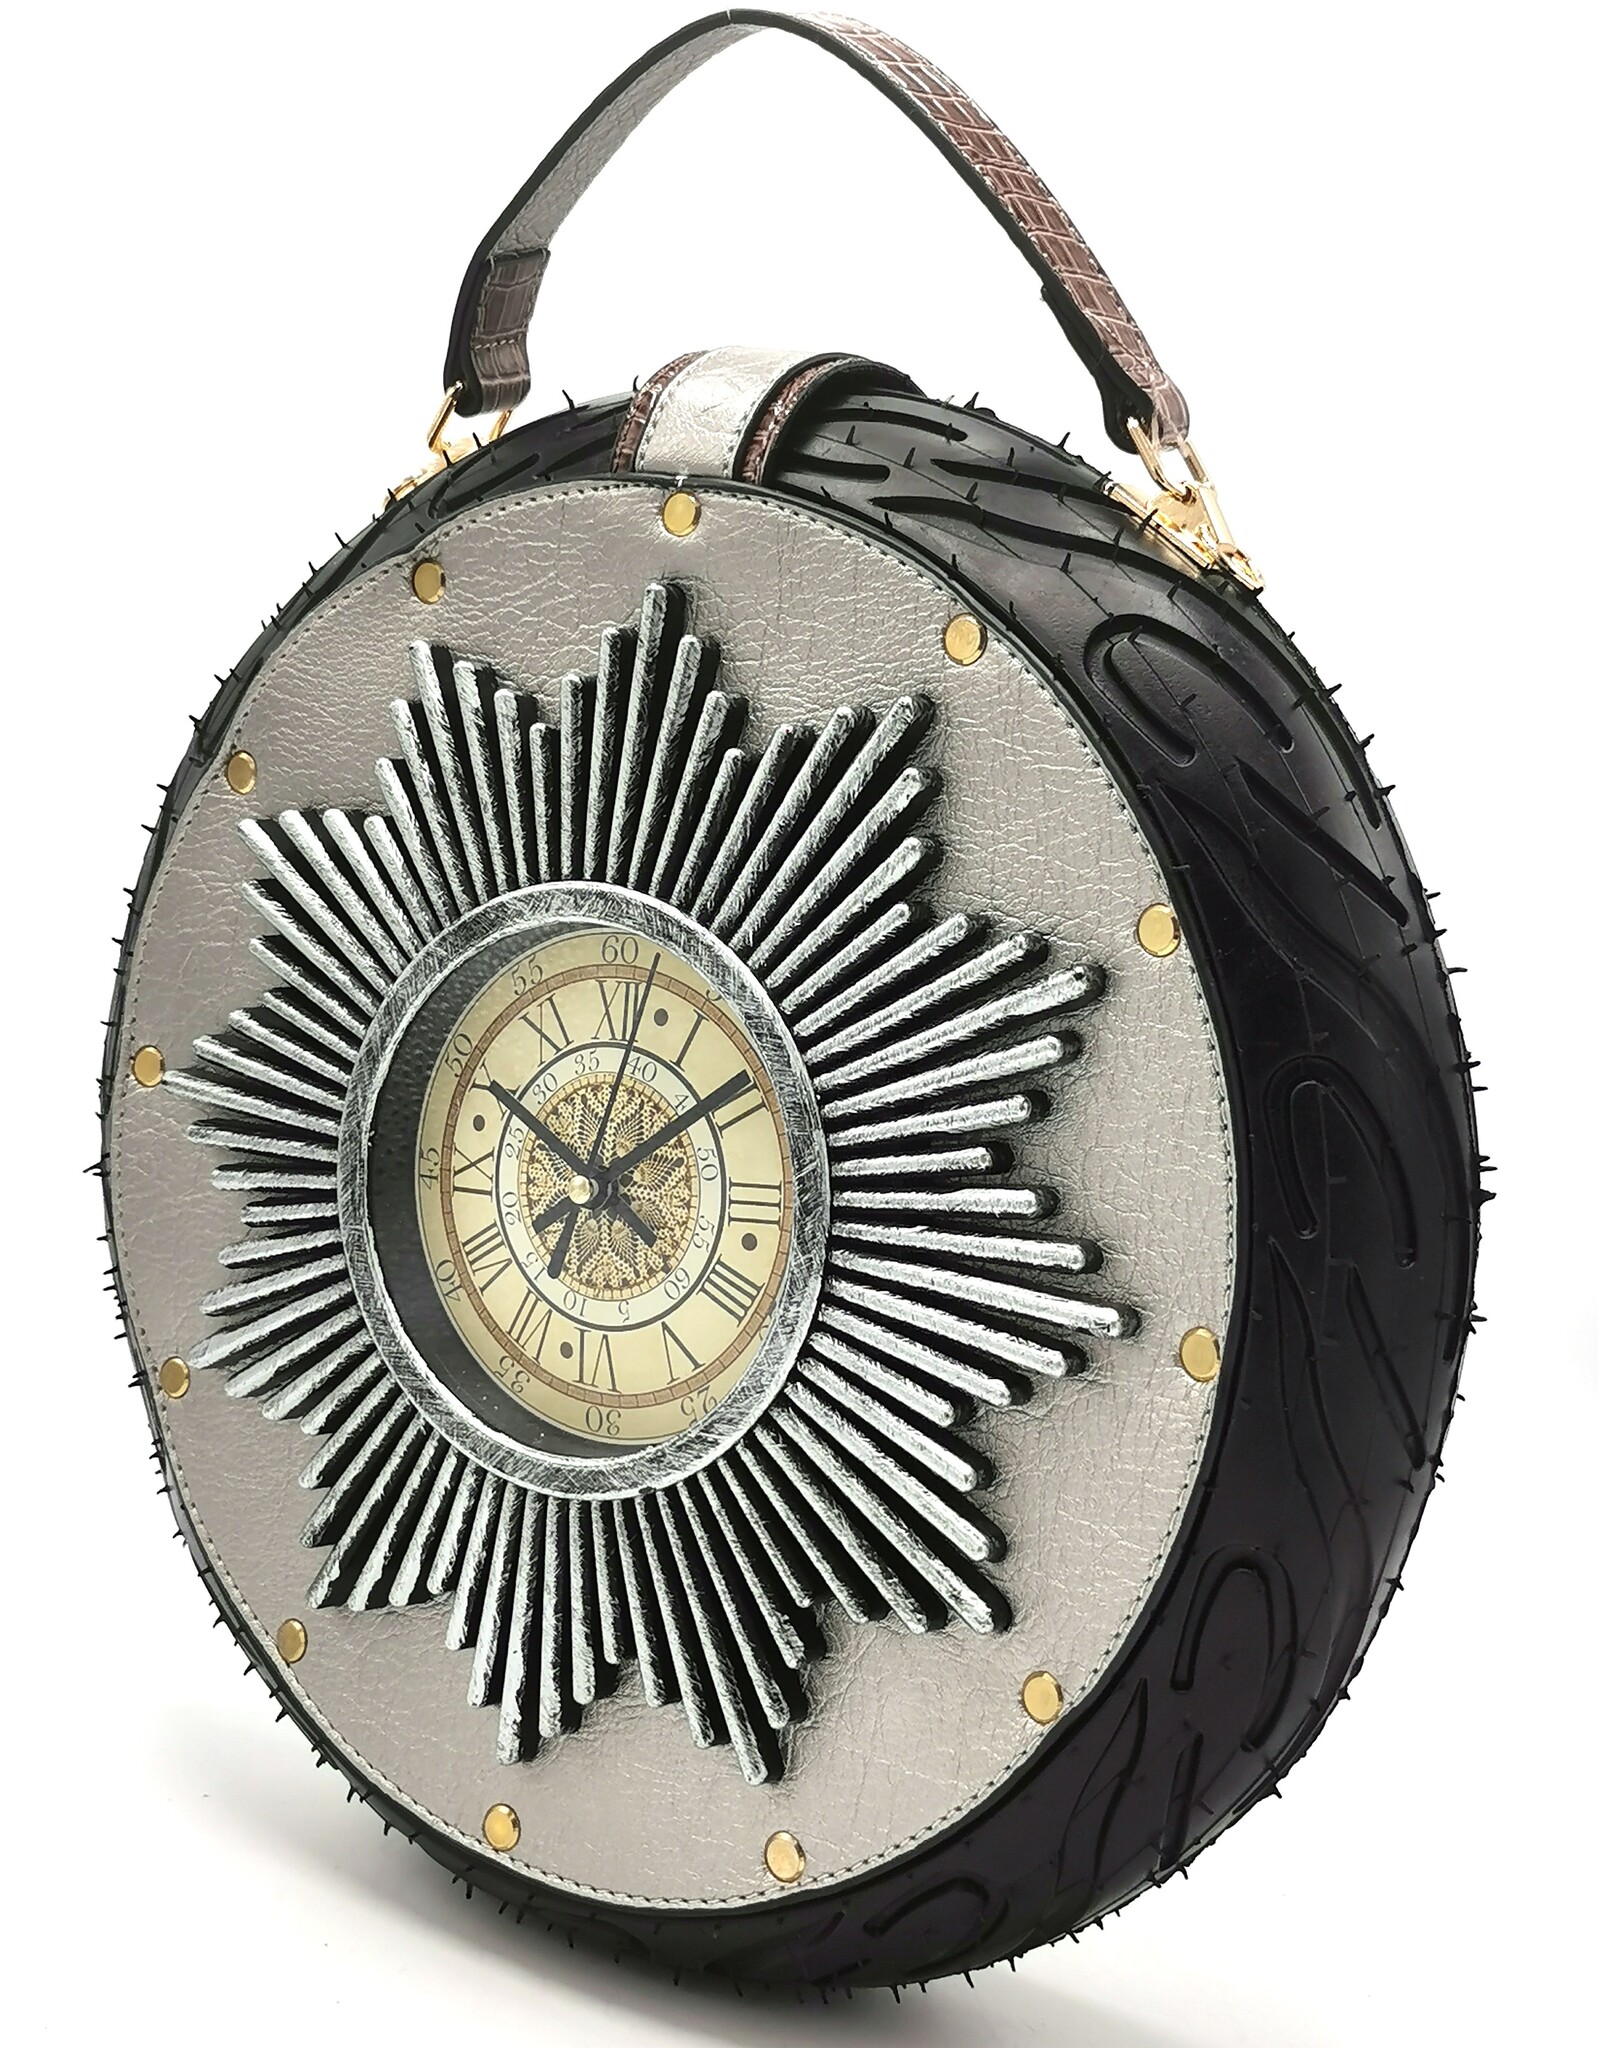 Magic Bags Fantasy bags - Clock bag with Working Clock Raceband Silver (large)